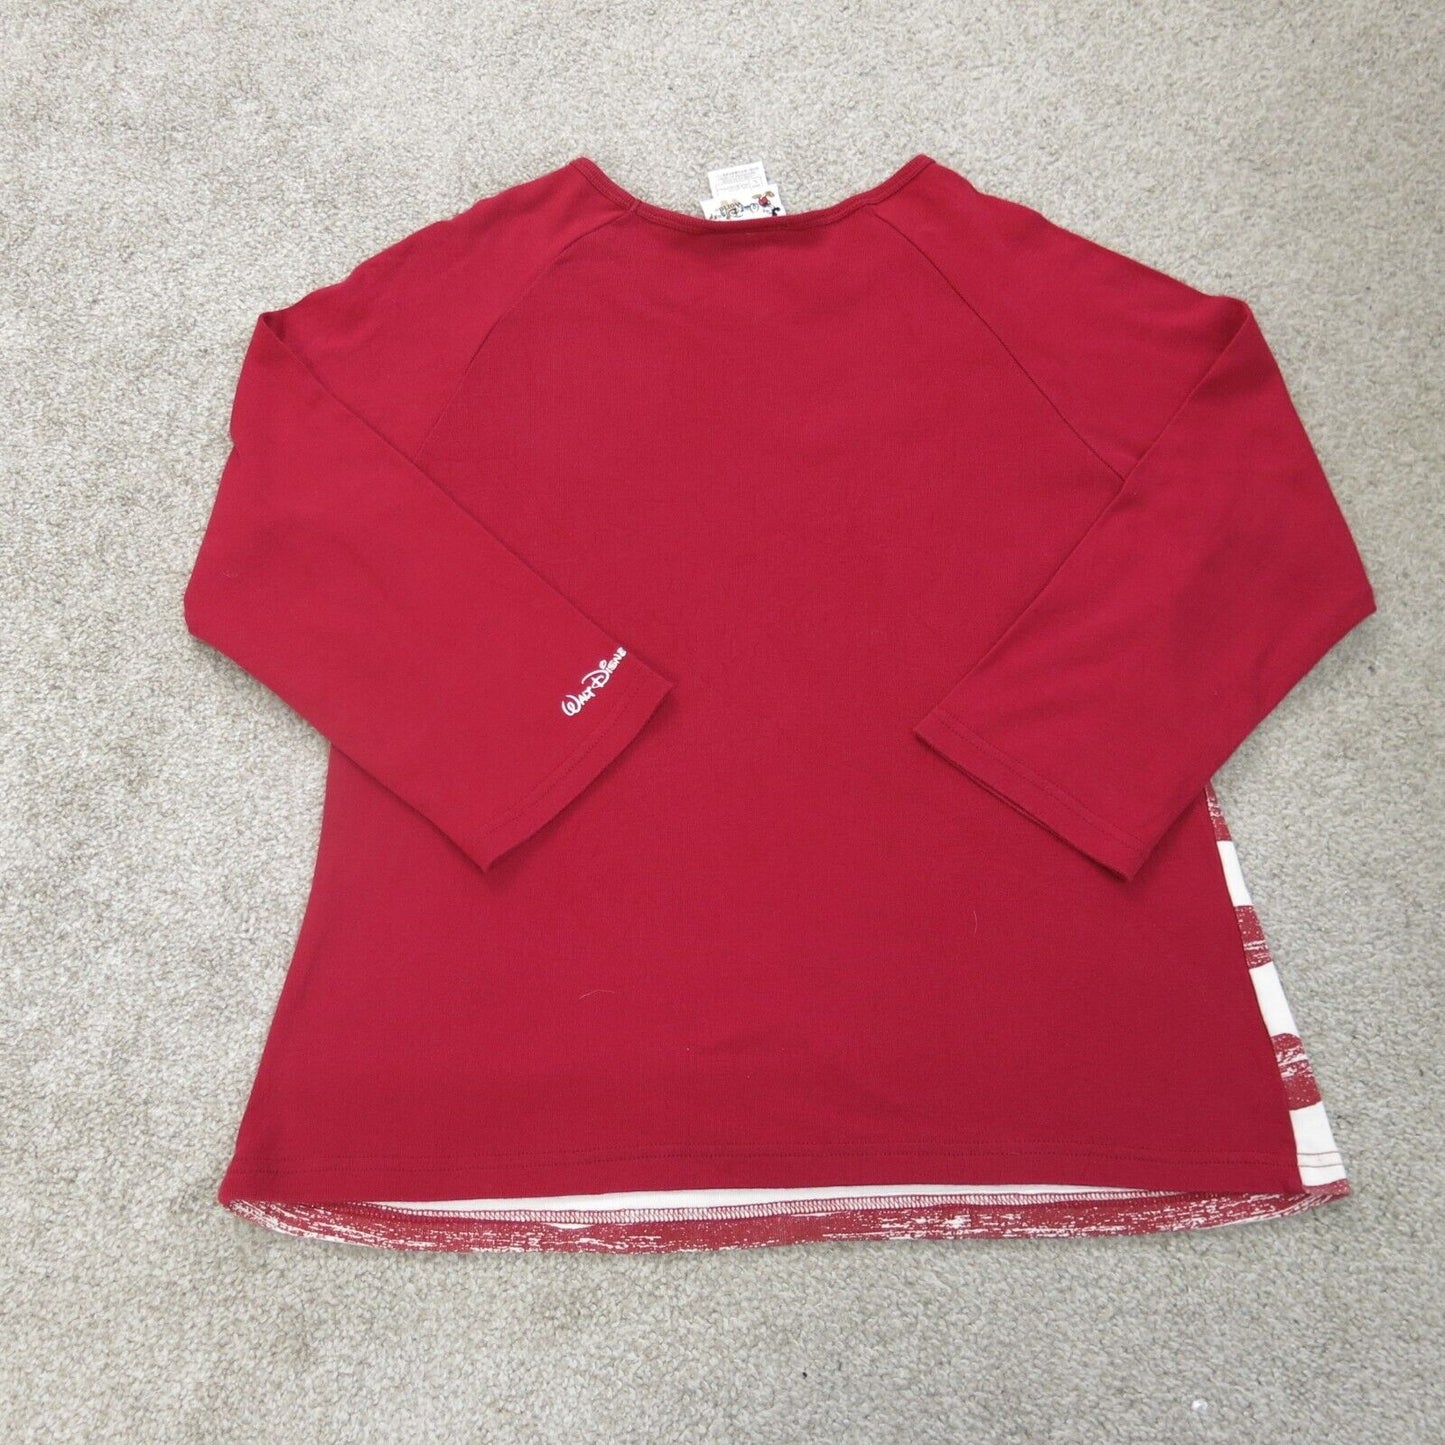 Disney Shirt Womens Large Red Long Sleeve 100% Cotton Lightweight Top Crew Neck